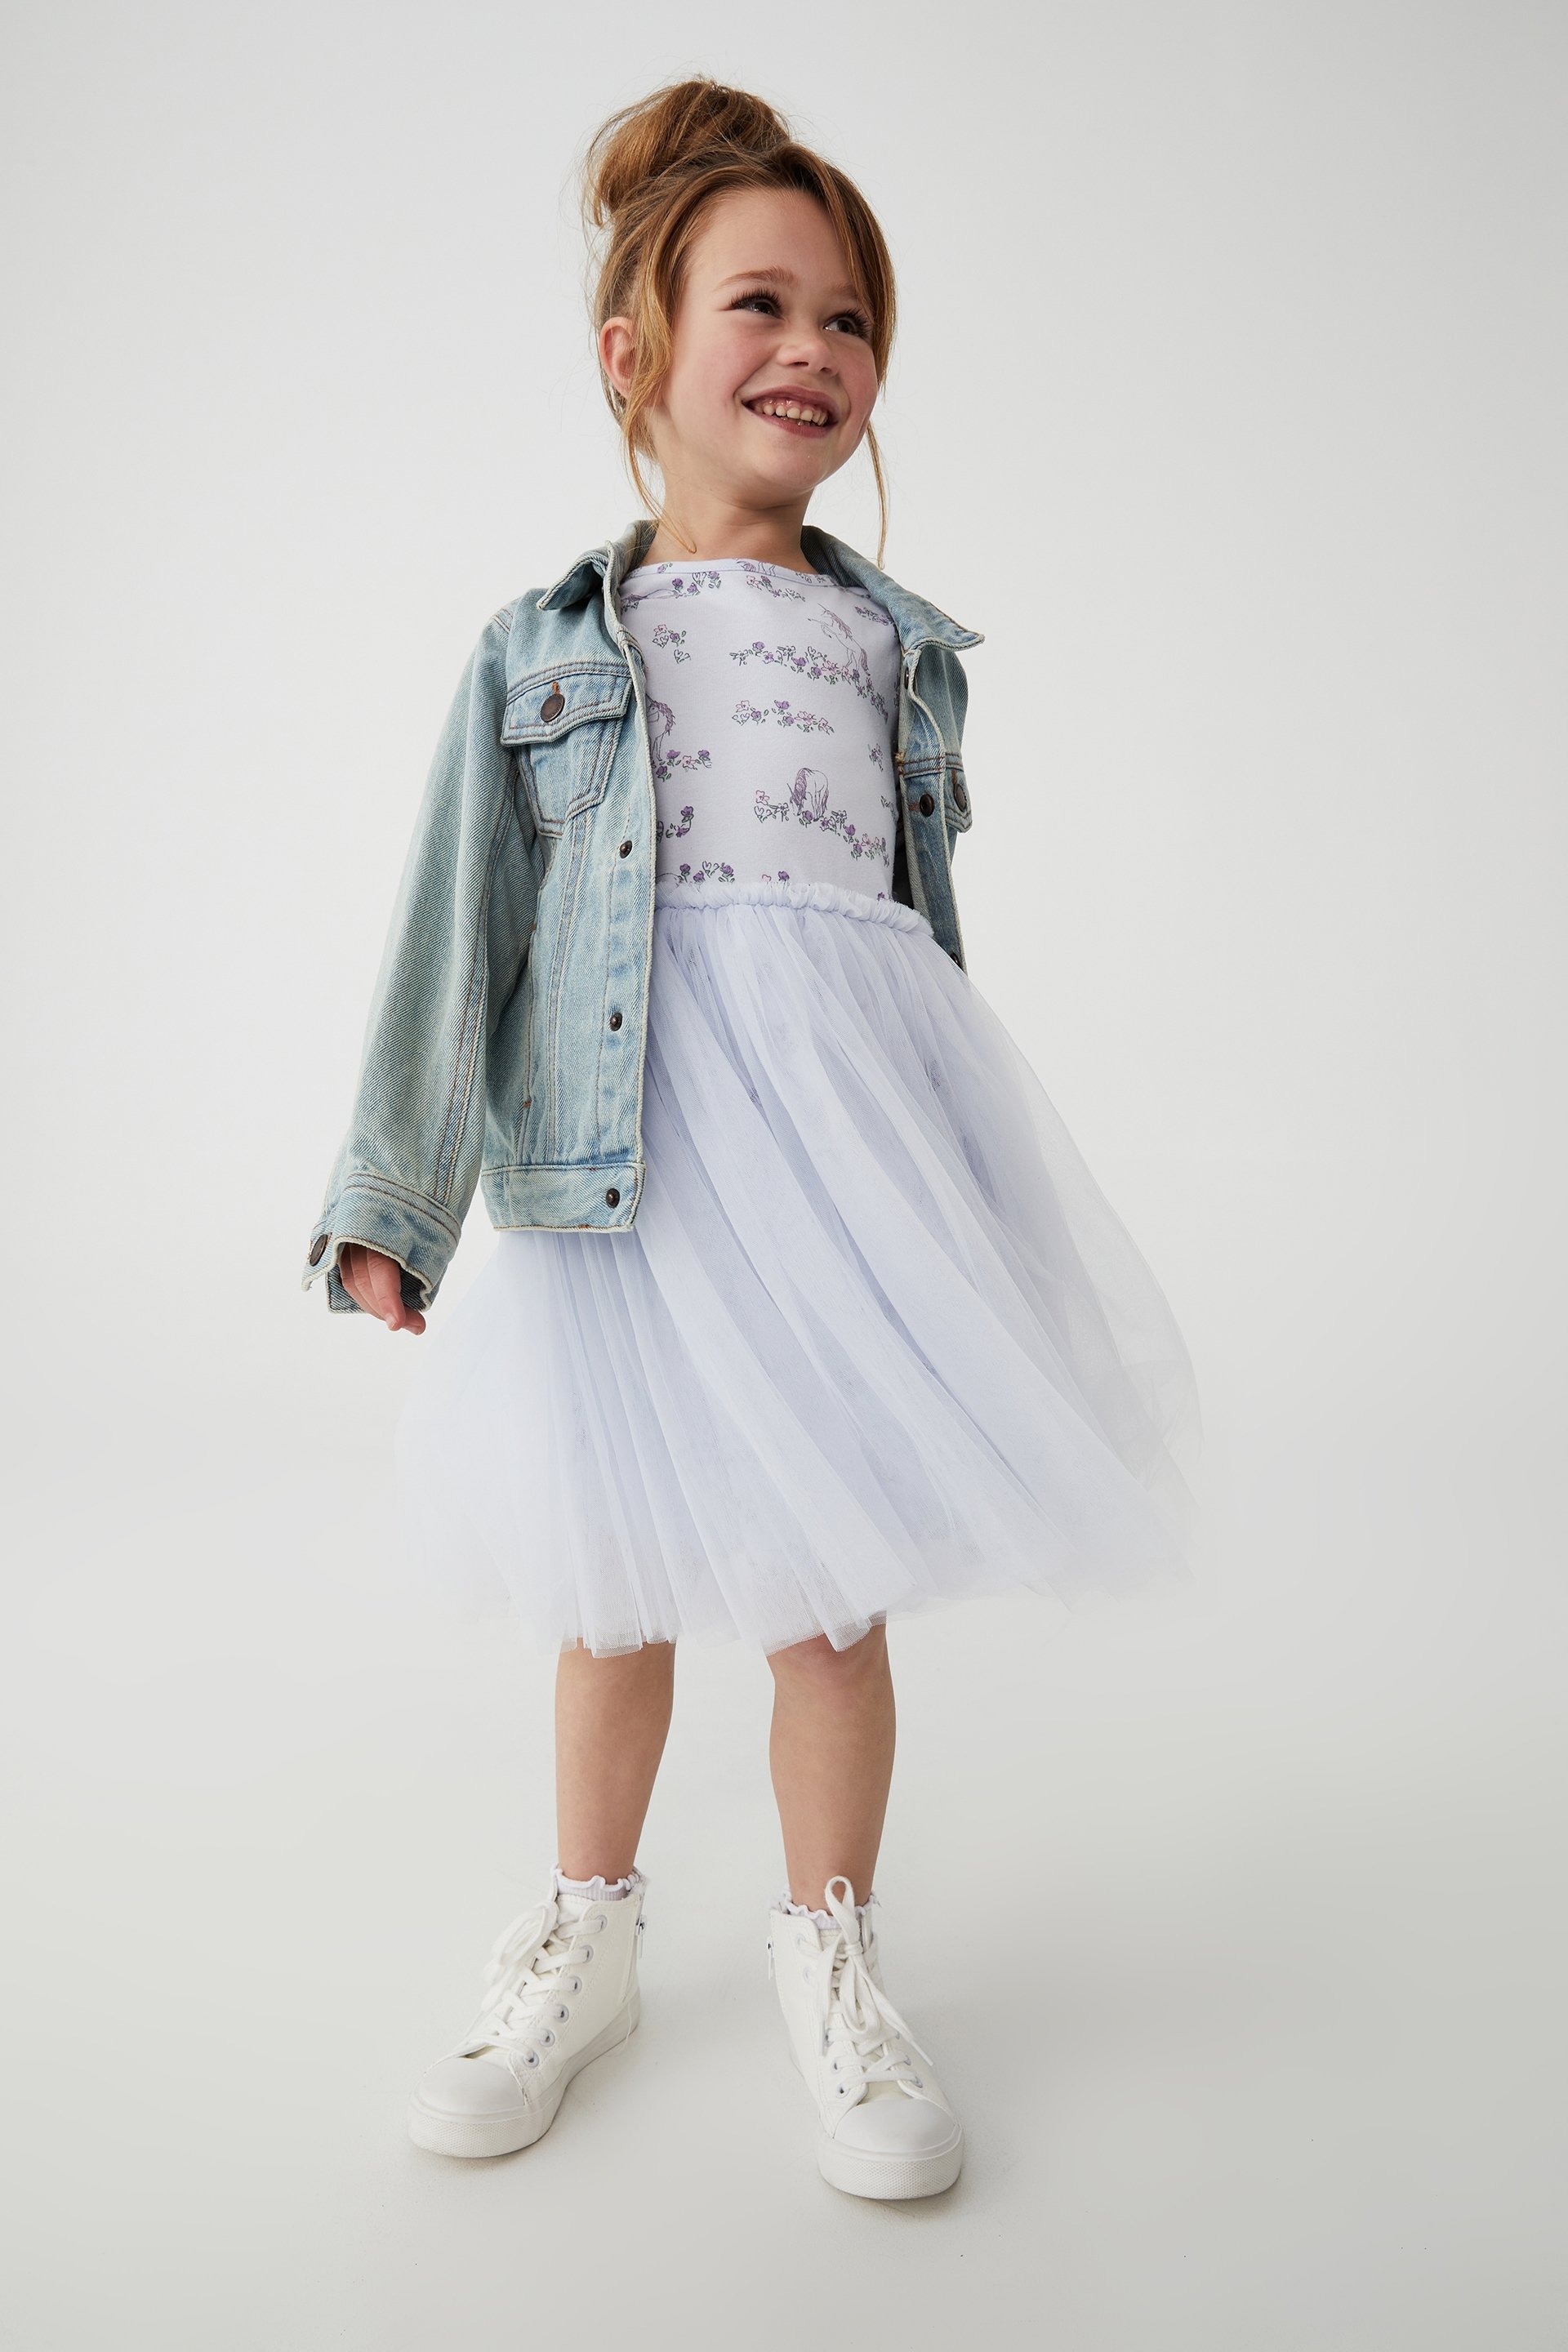 Cotton On Kids - Ivy Dress Up Dress - Morning blue unicorn meadow